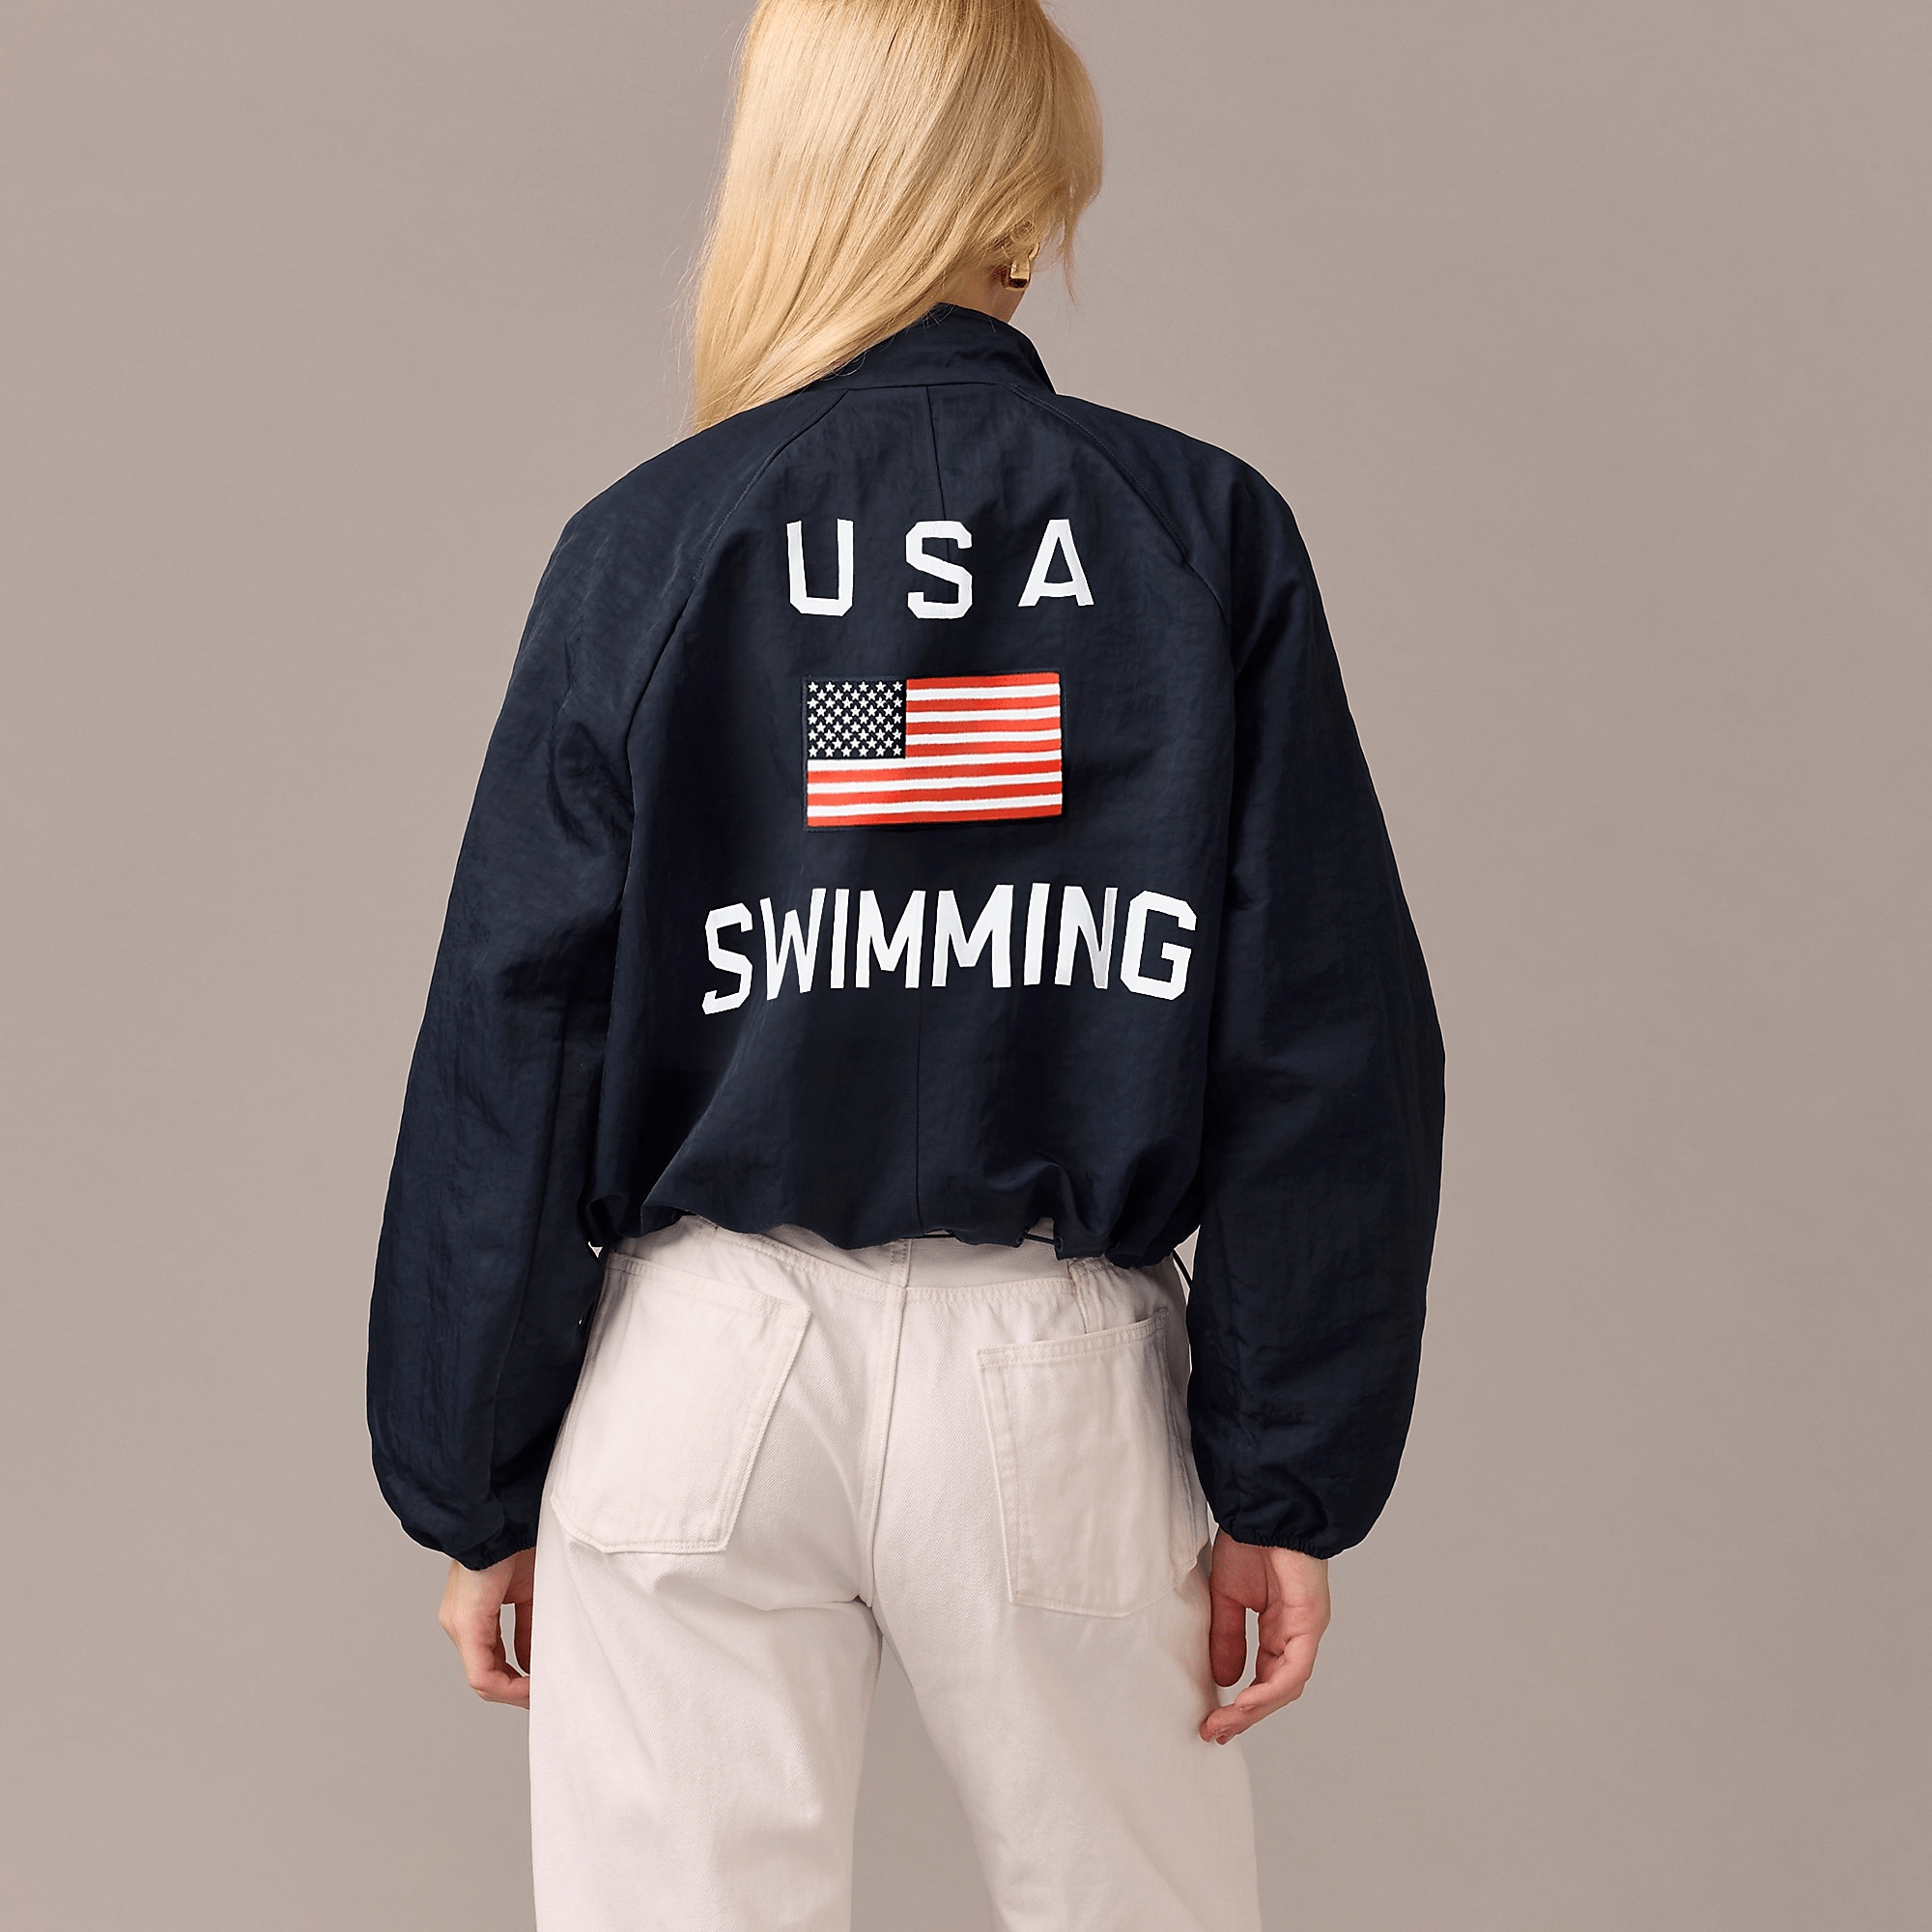 J. Crew Limited-Edition USA Swimming x Bomber Jacket